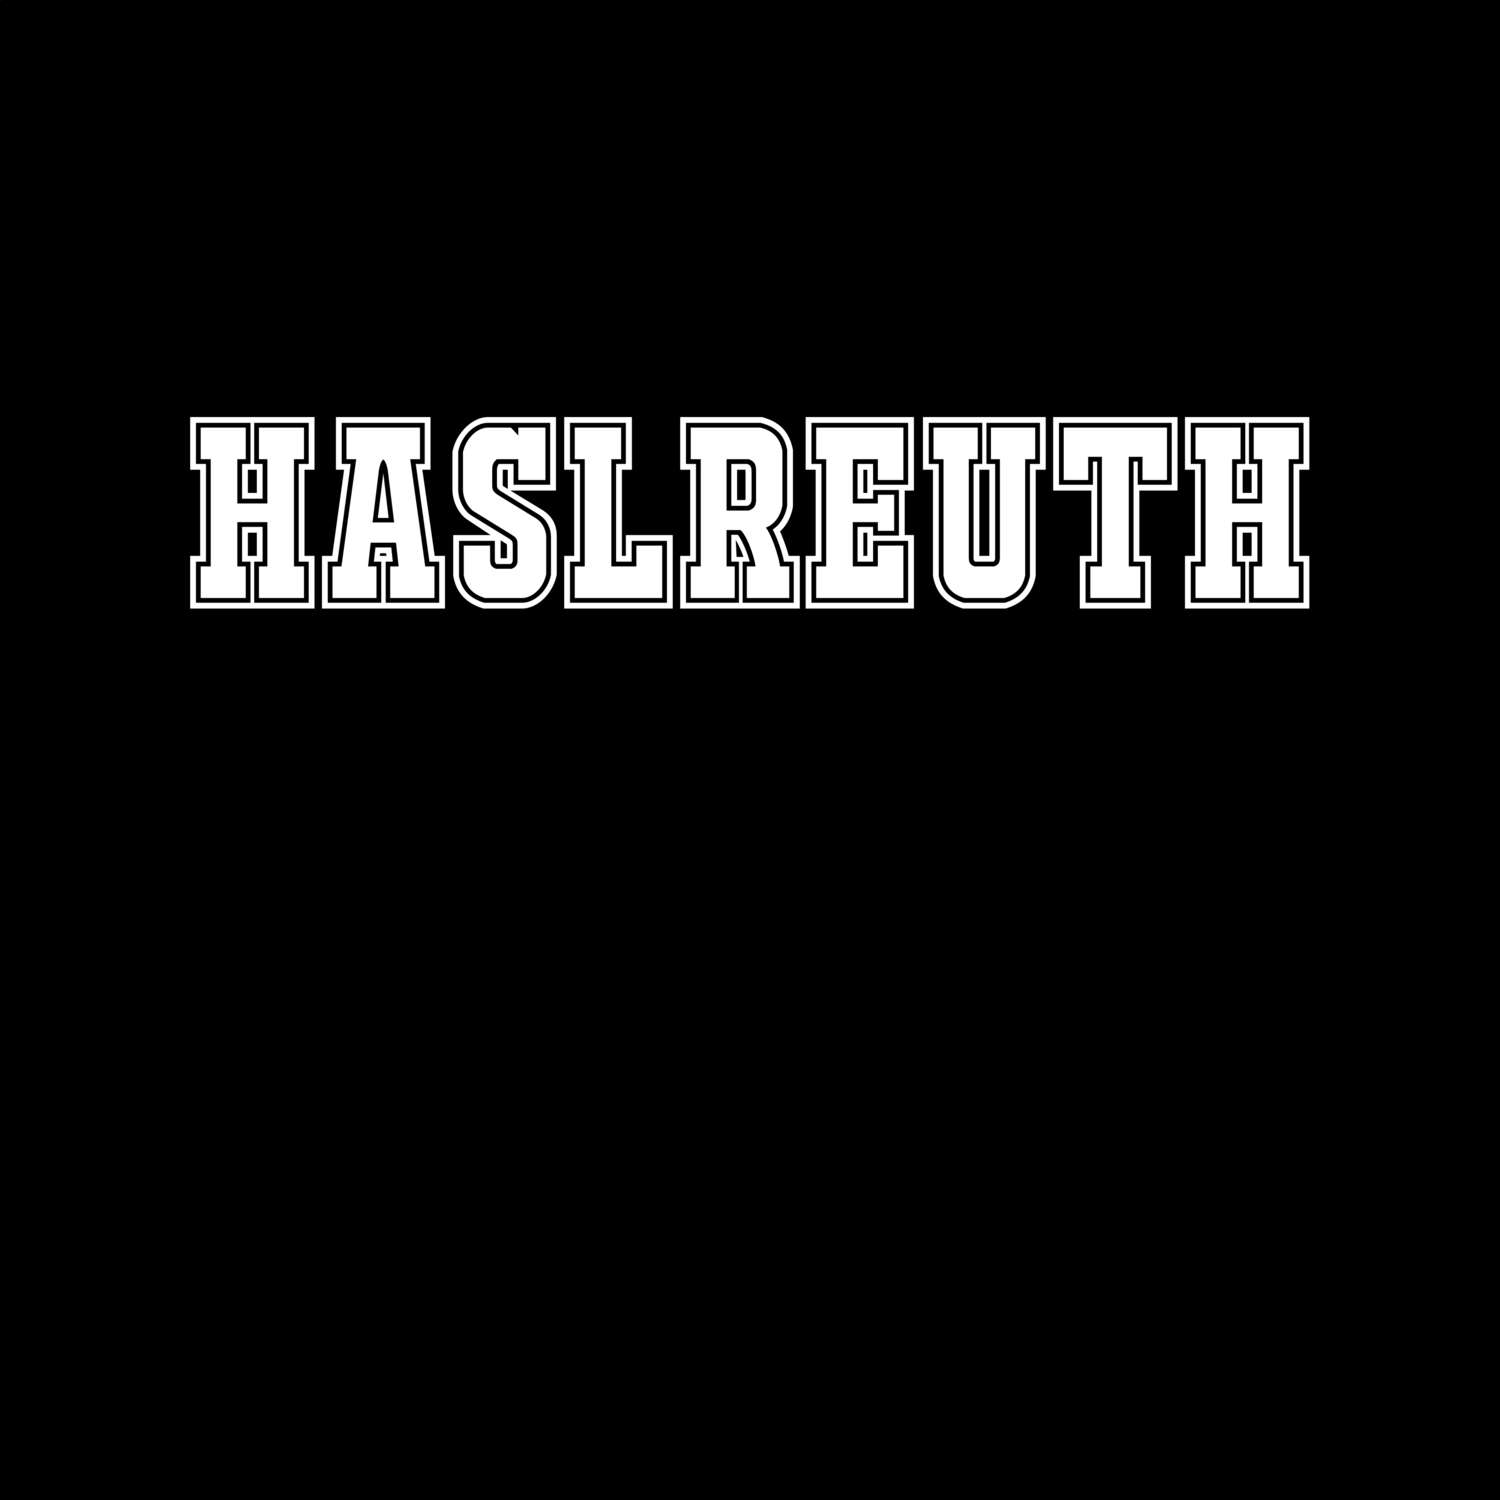 Haslreuth T-Shirt »Classic«